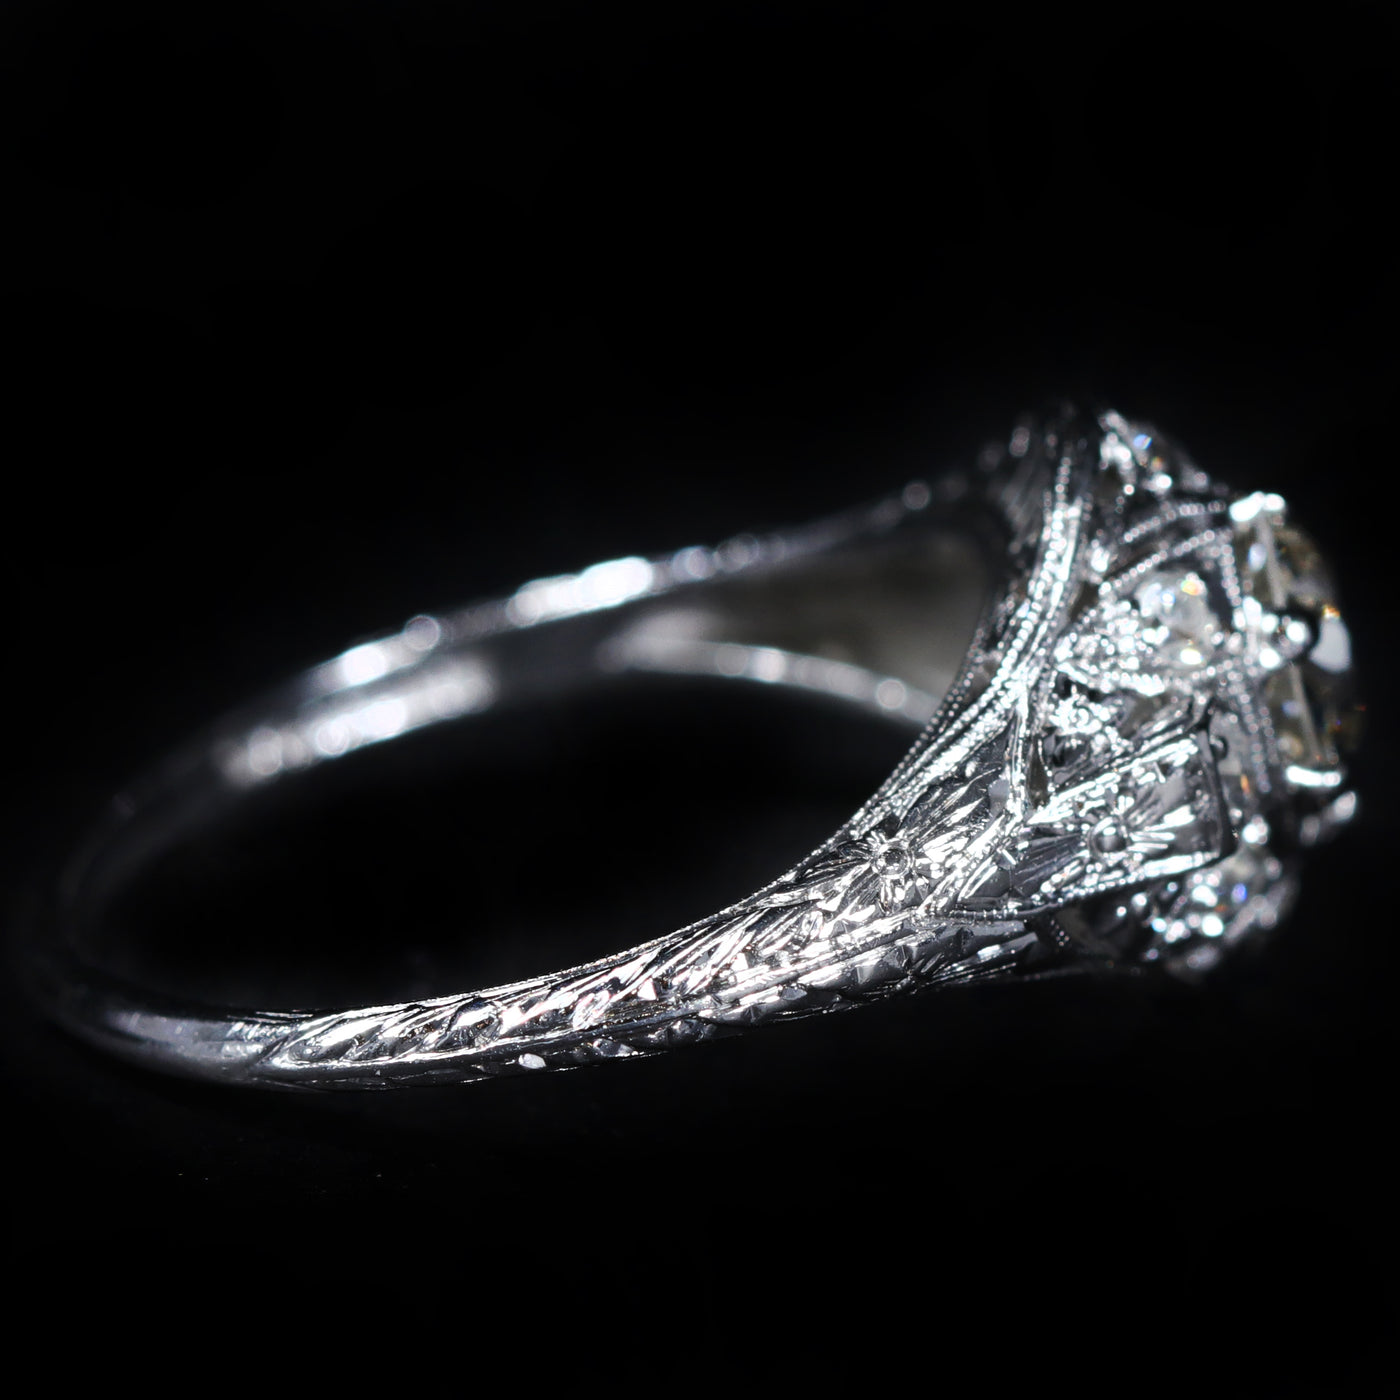 Art Deco 0.65 Carat Old European Cut Diamond Engagement Ring